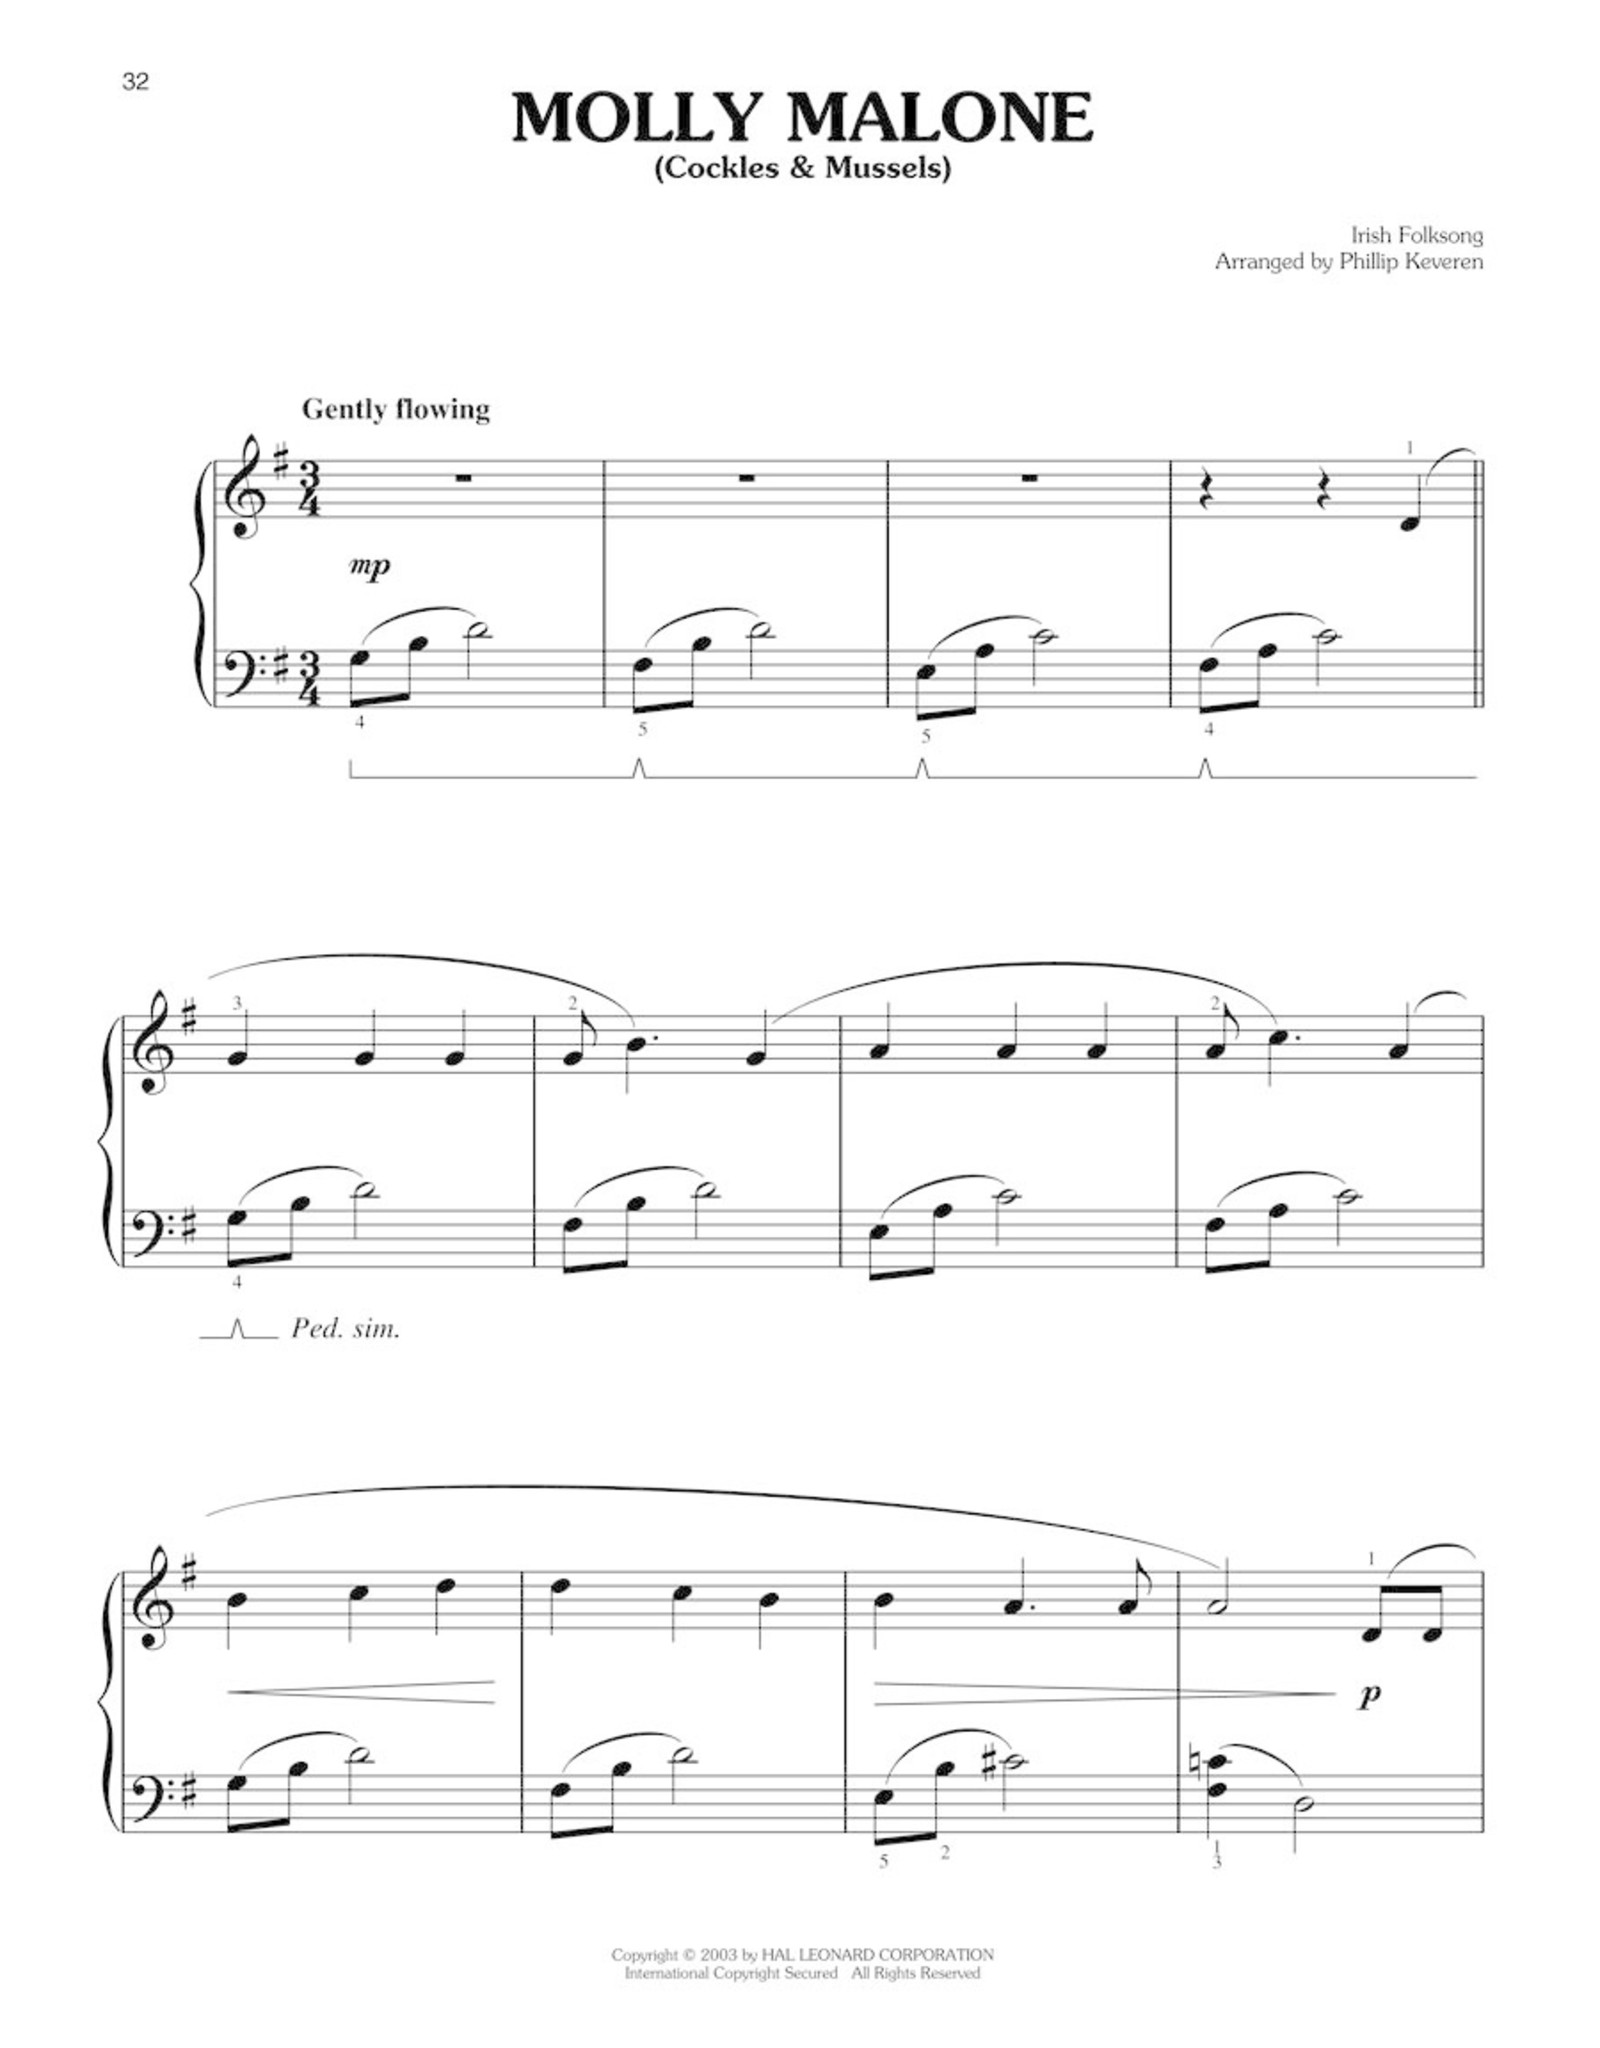 Hal Leonard Celtic Dreams arr. Philip Keveren - Easy Piano